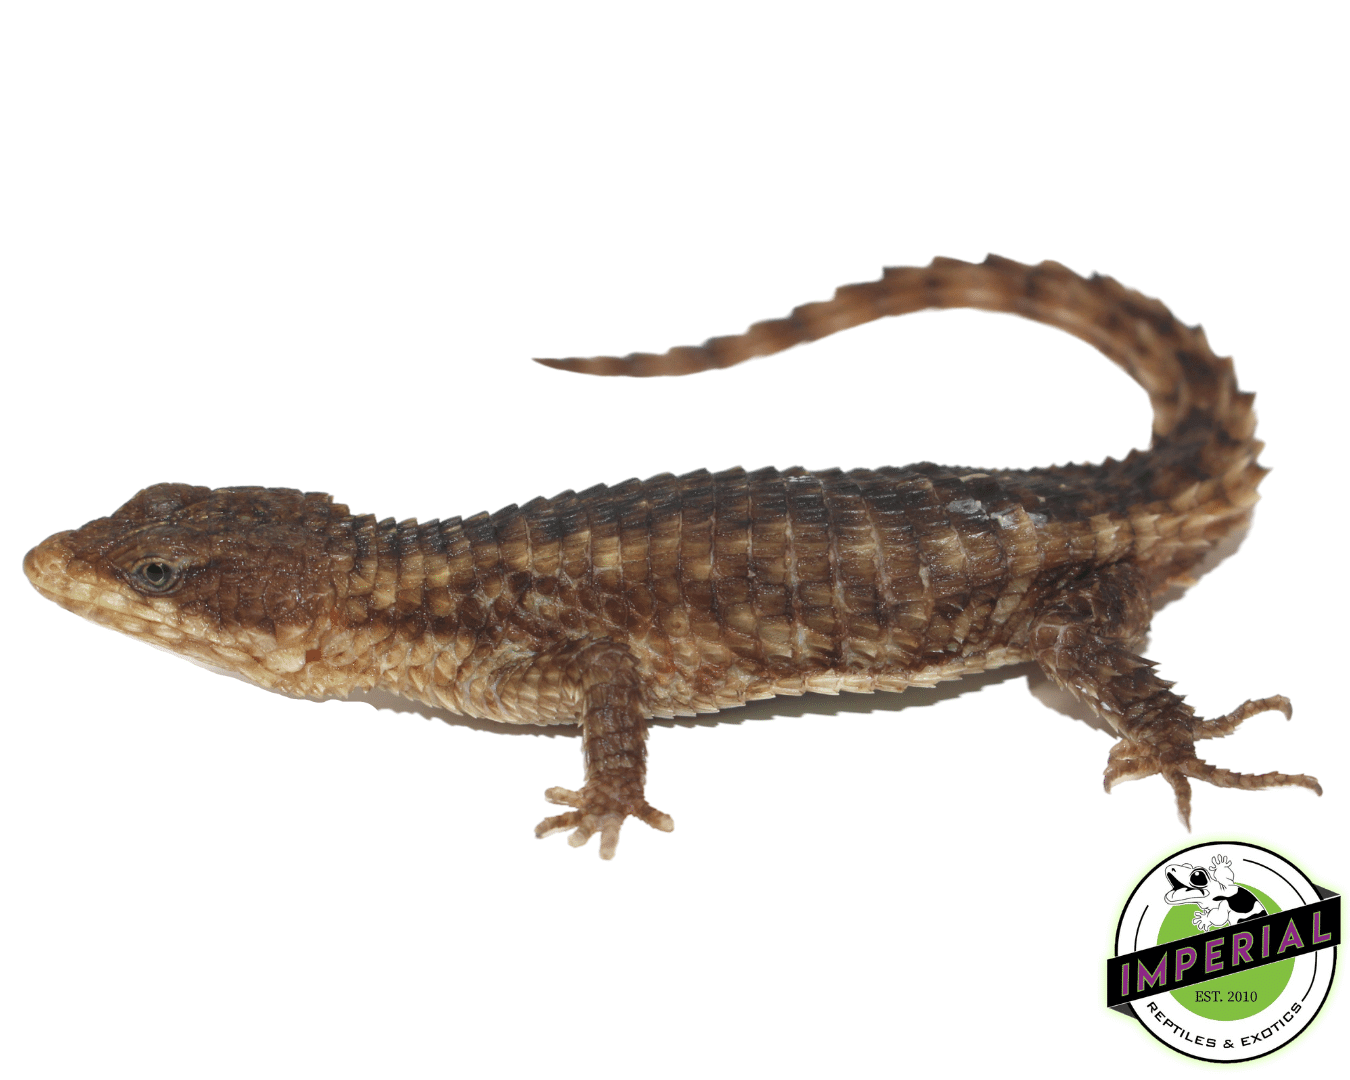 armadillo lizard for sale, buy reptiles online